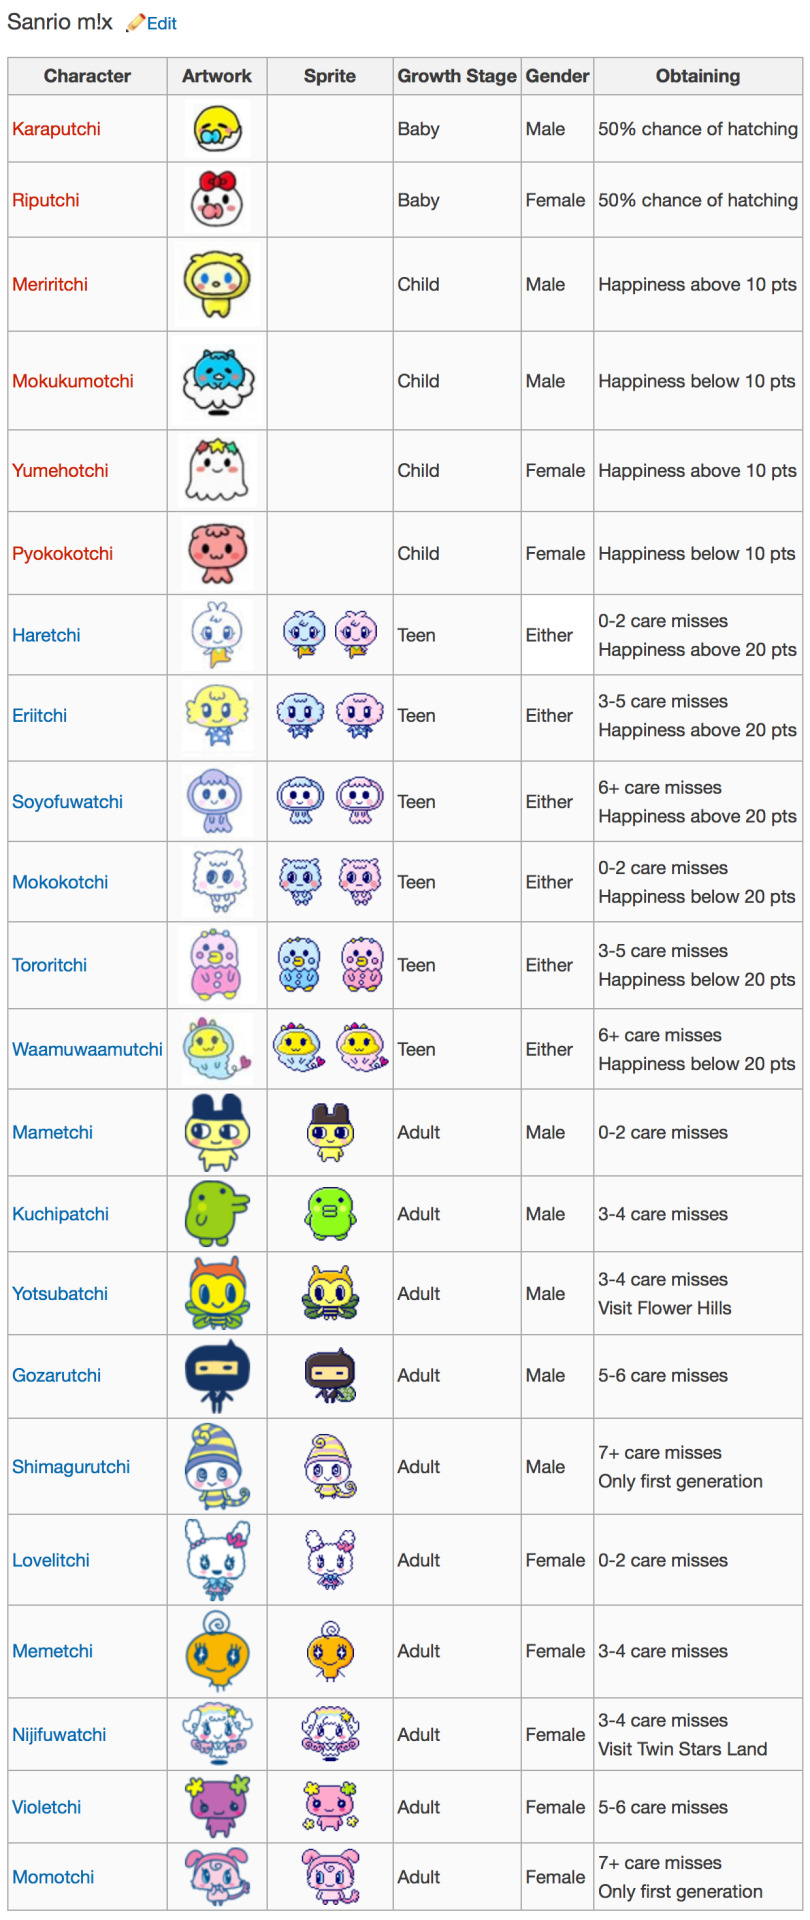 Tamagotchi Color Growth Chart